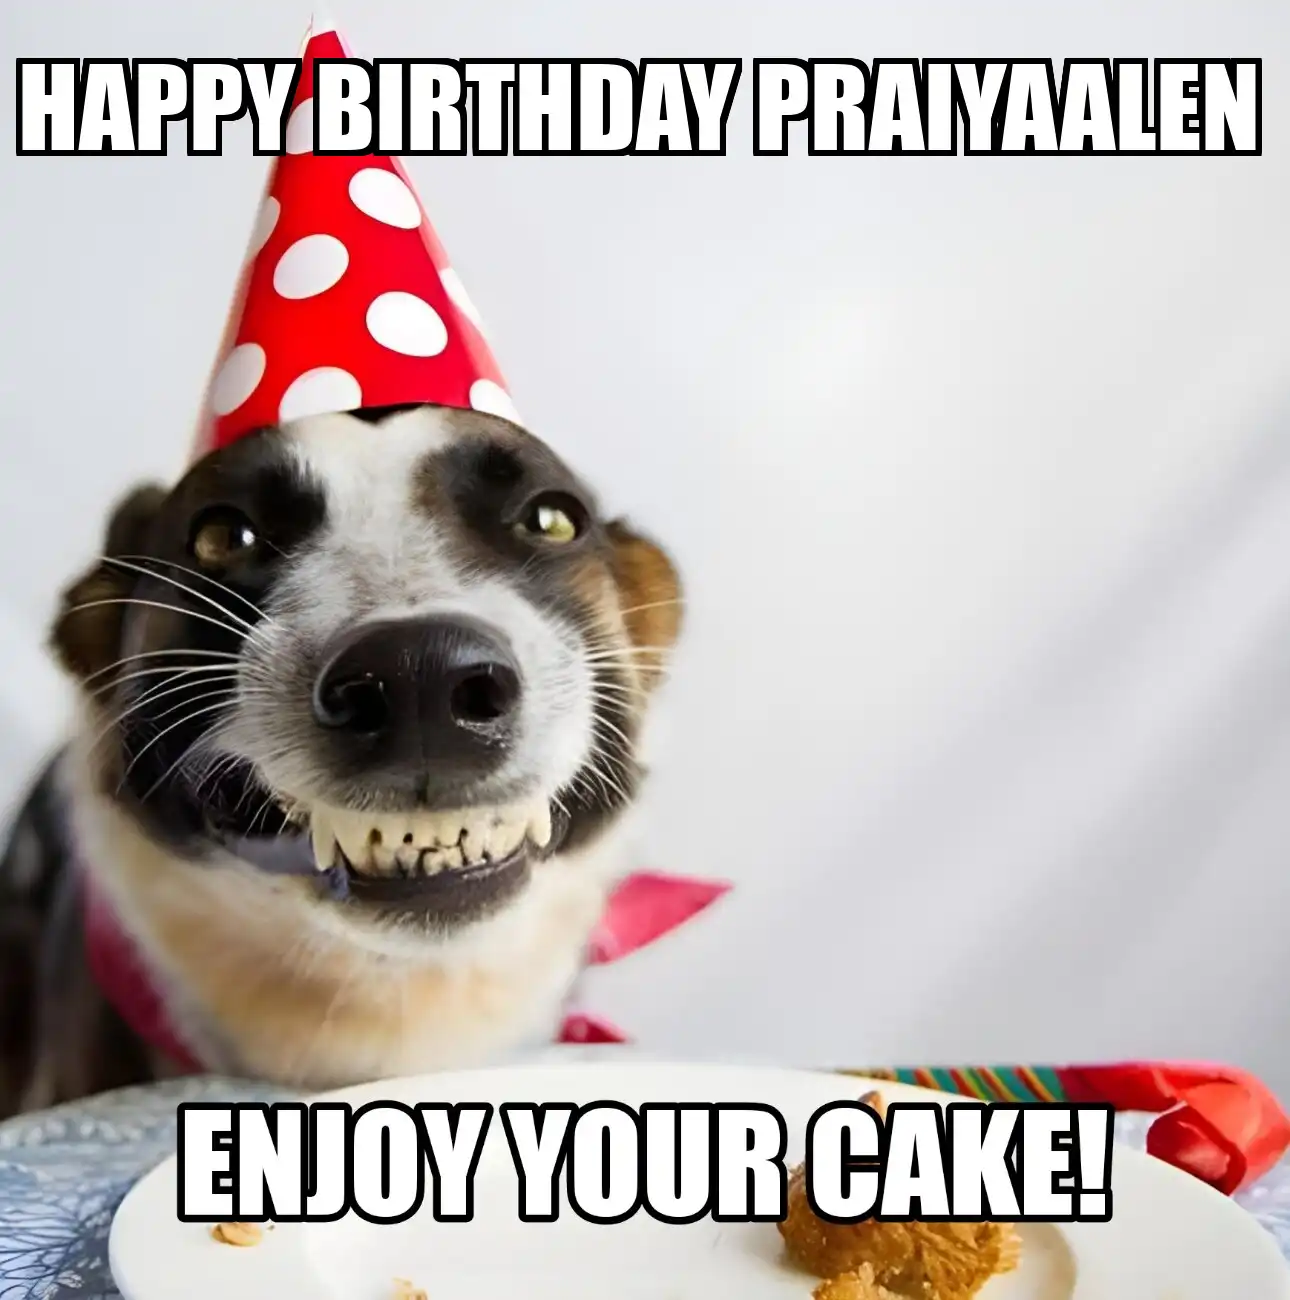 Happy Birthday Praiyaalen Enjoy Your Cake Dog Meme